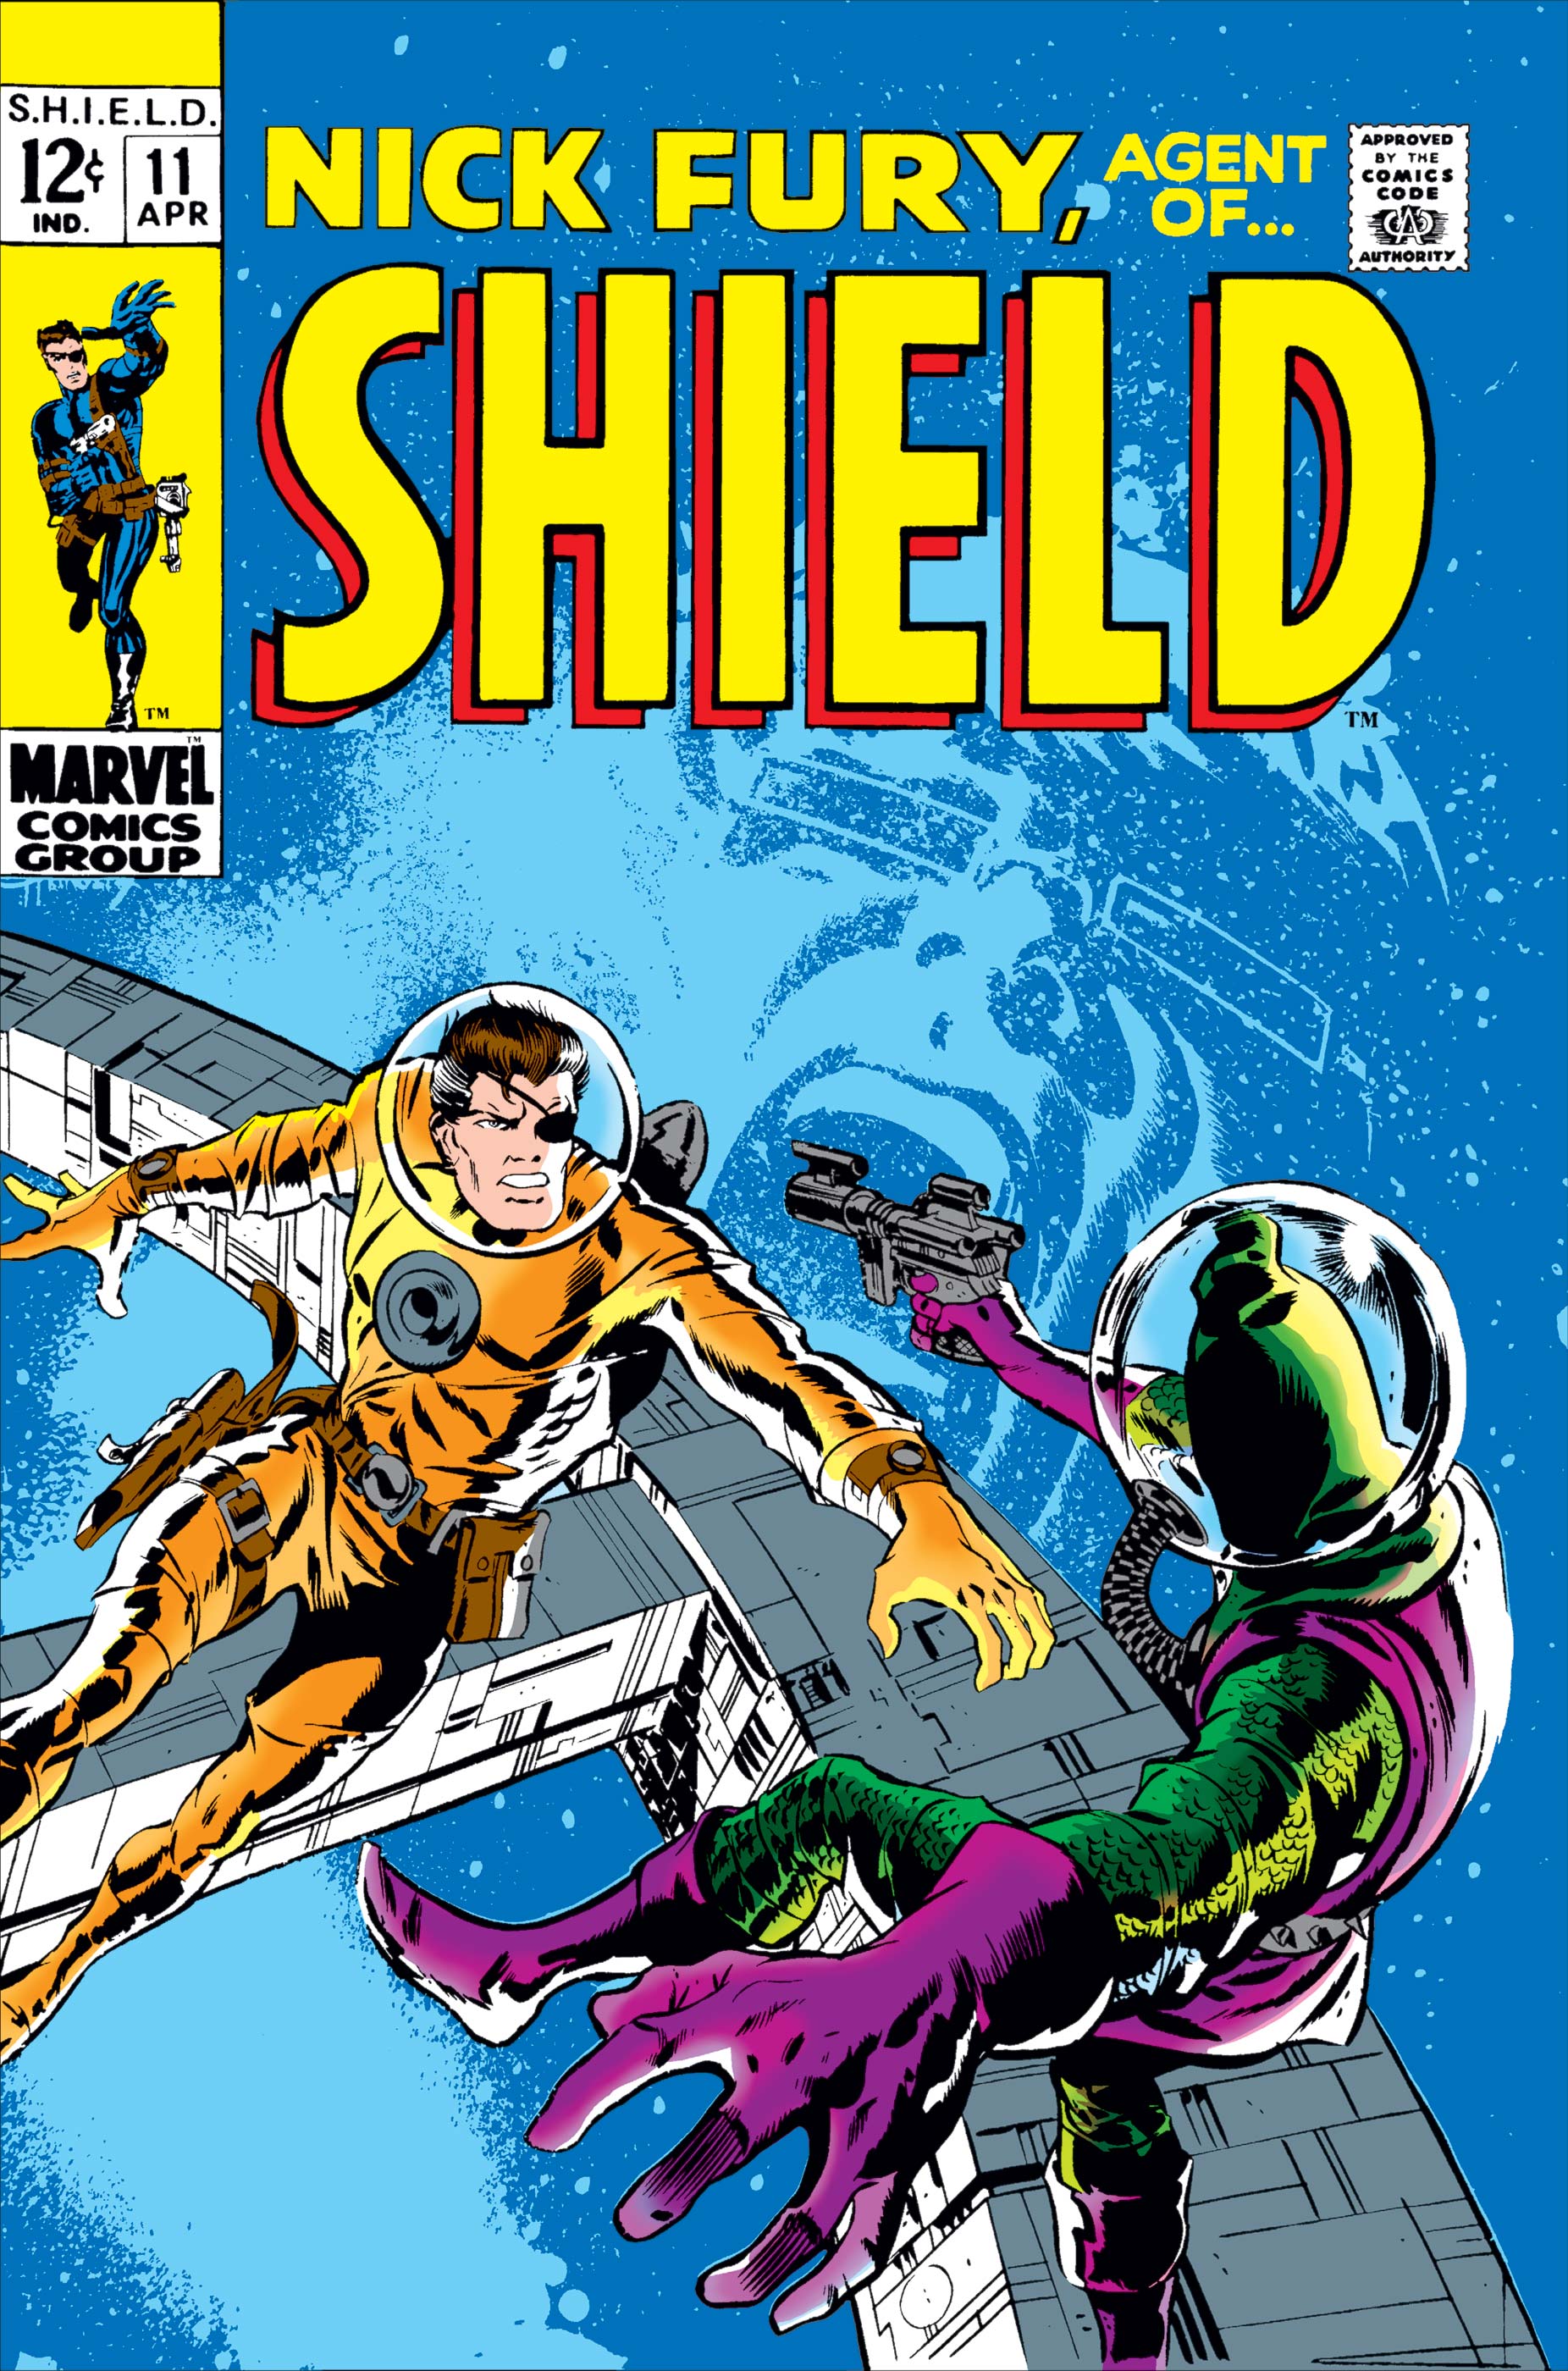 Nick Fury, Agent of S.H.I.E.L.D. (1968) #11